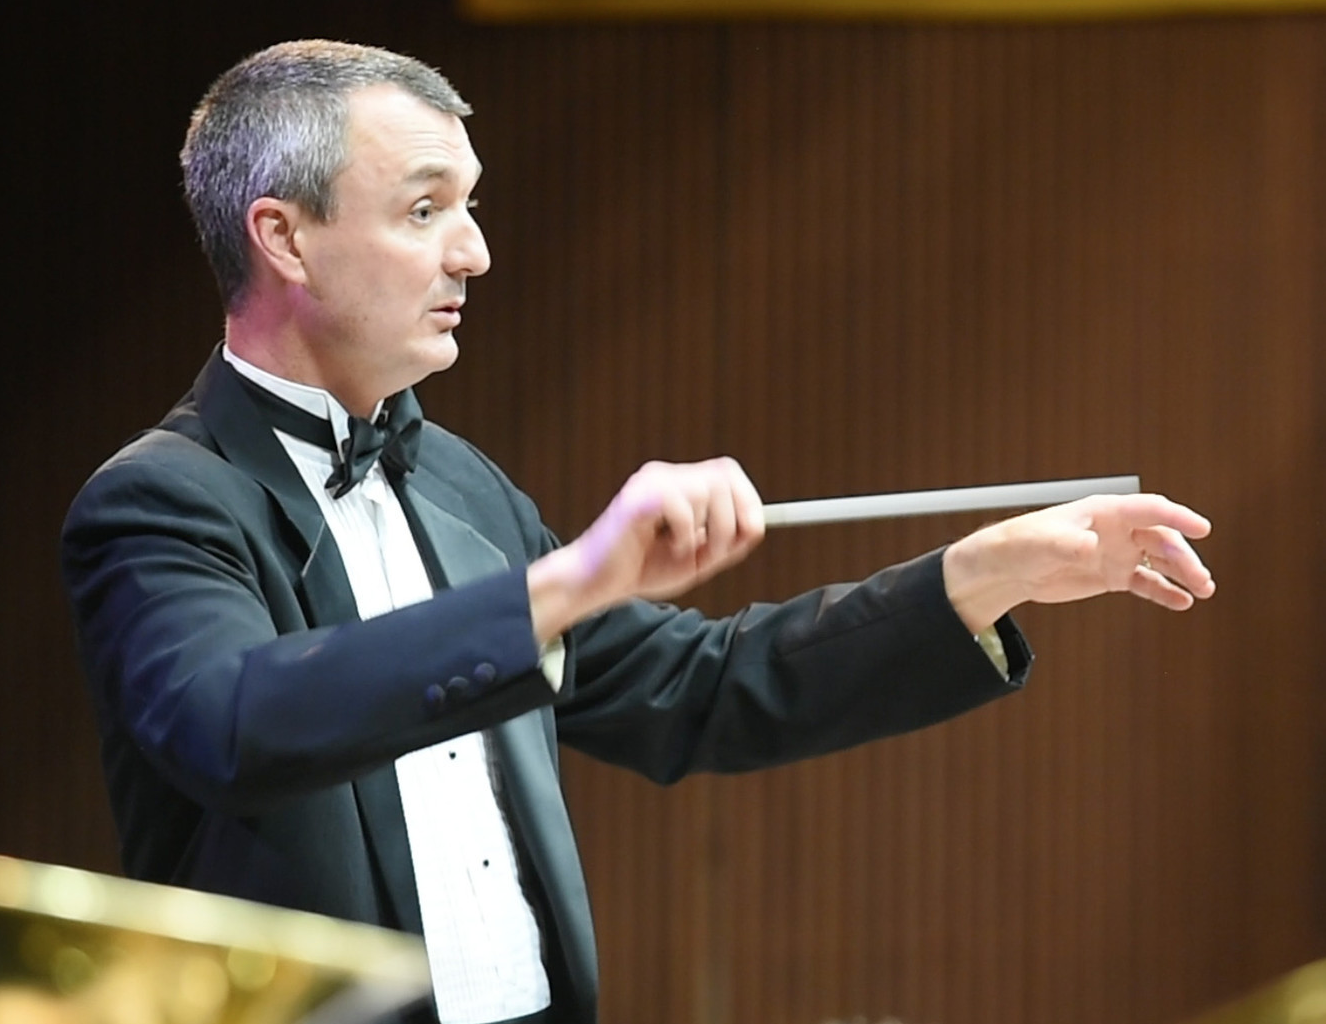 Photo: Rick Hauf conducting